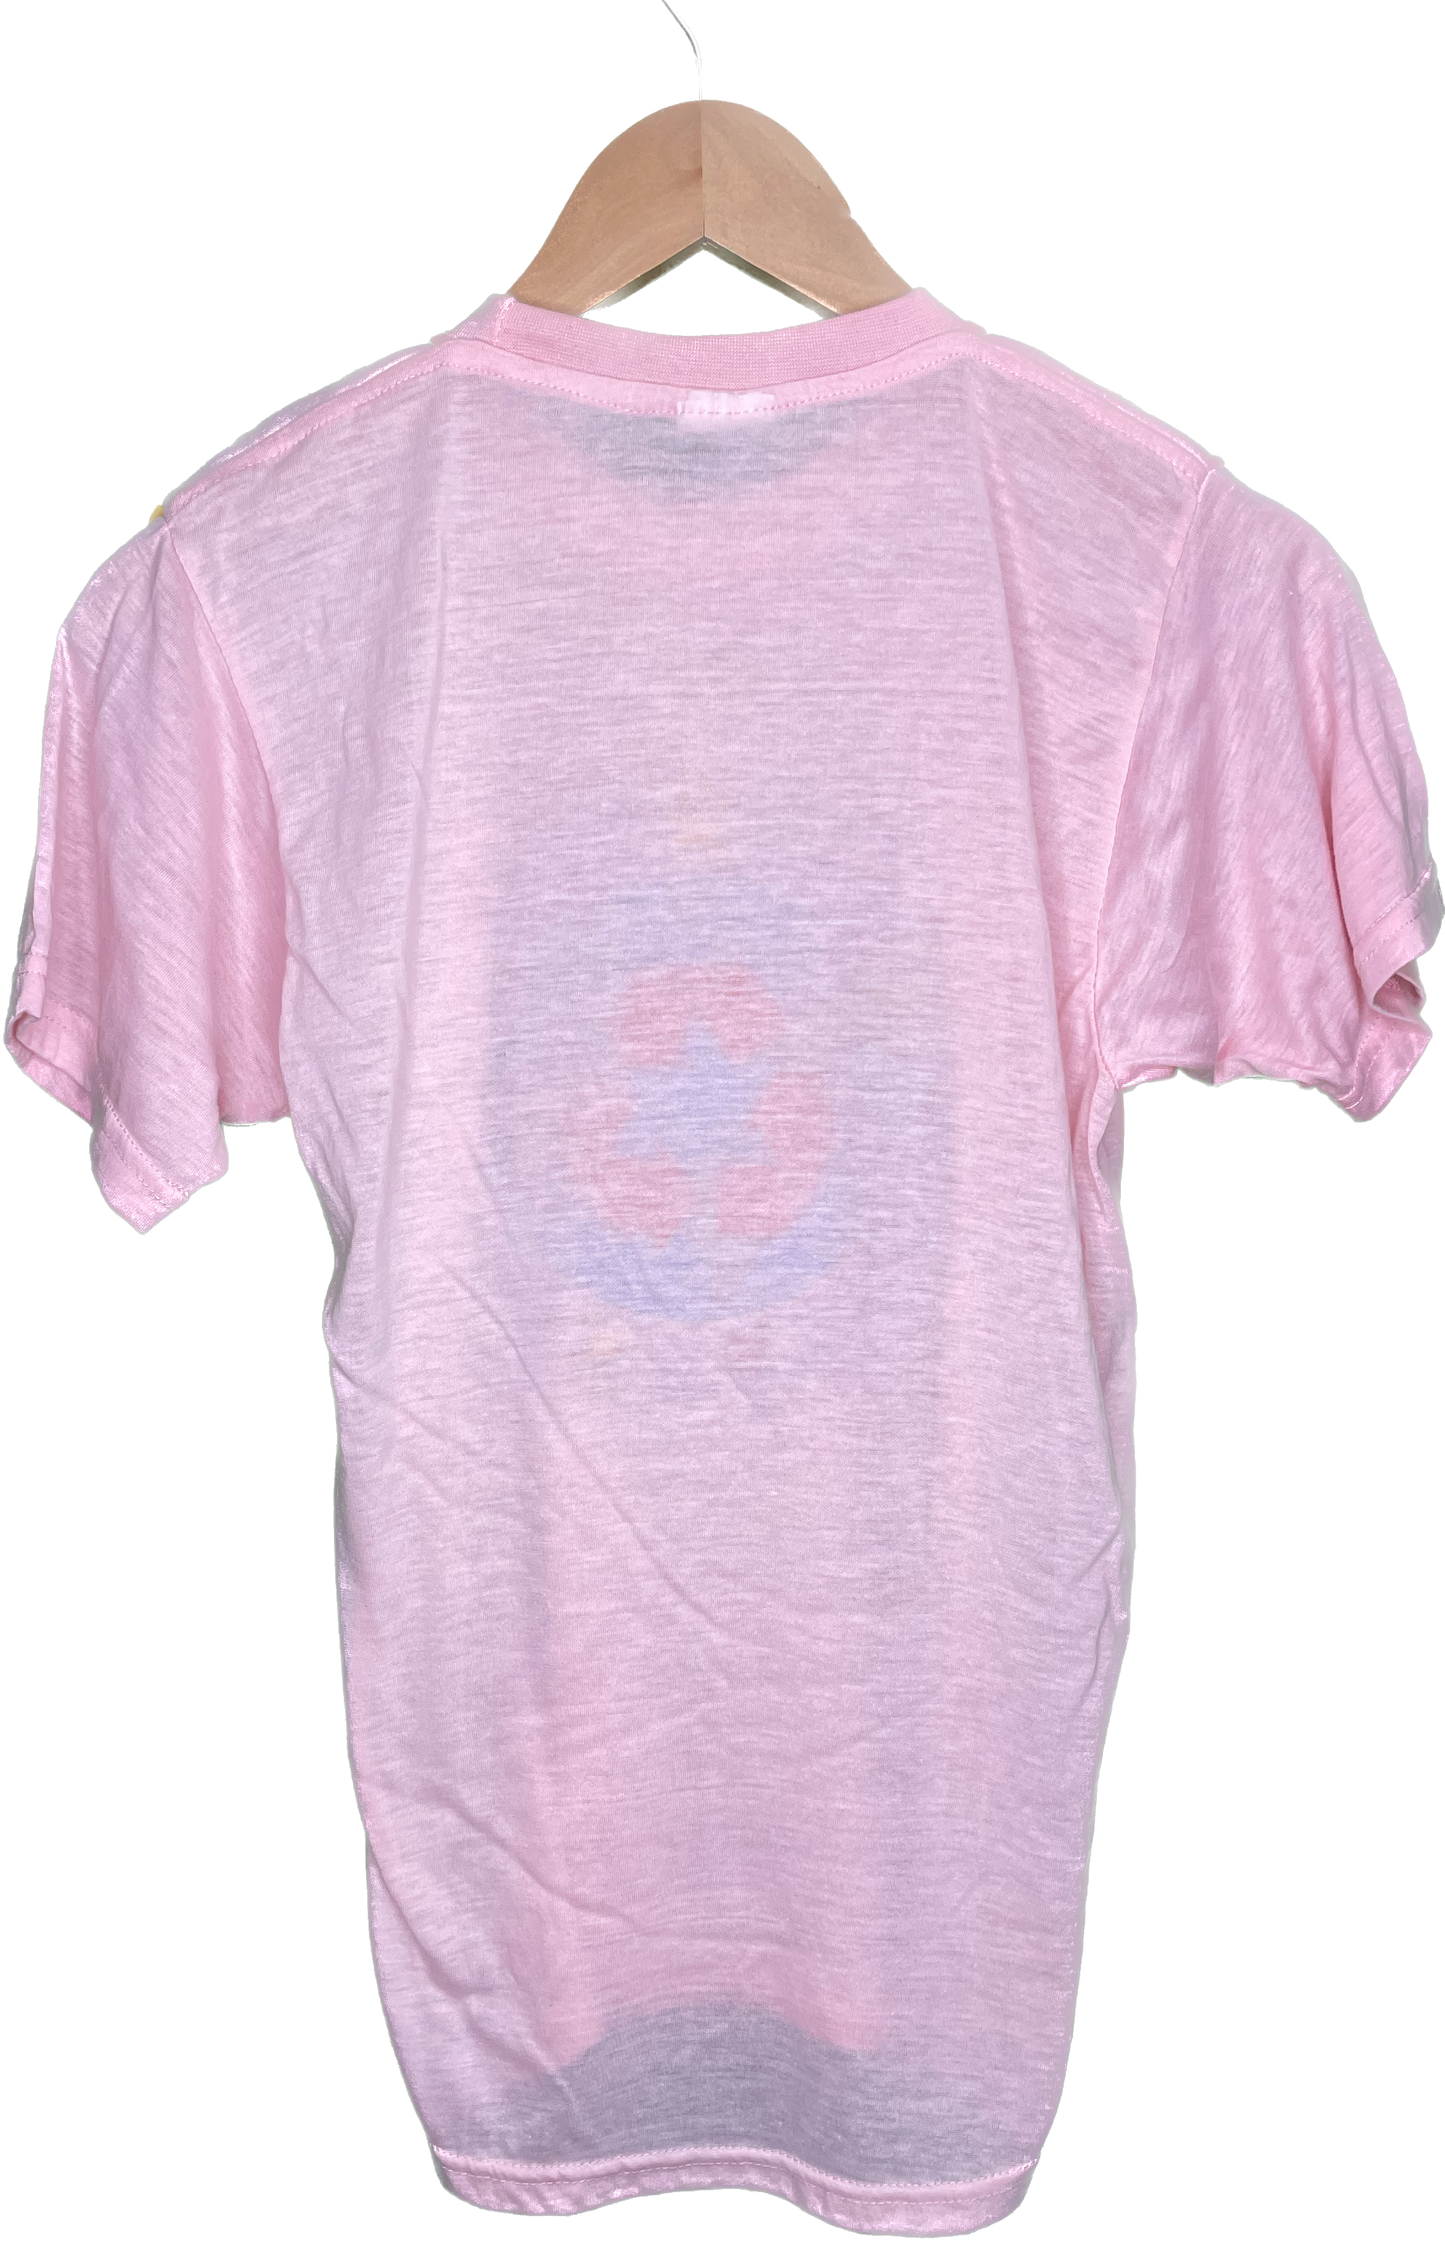 Vintage XS/S Recycle Reduce Rewear Village Vintage Merch Pink Short Sleeve Ringer T-Shirt